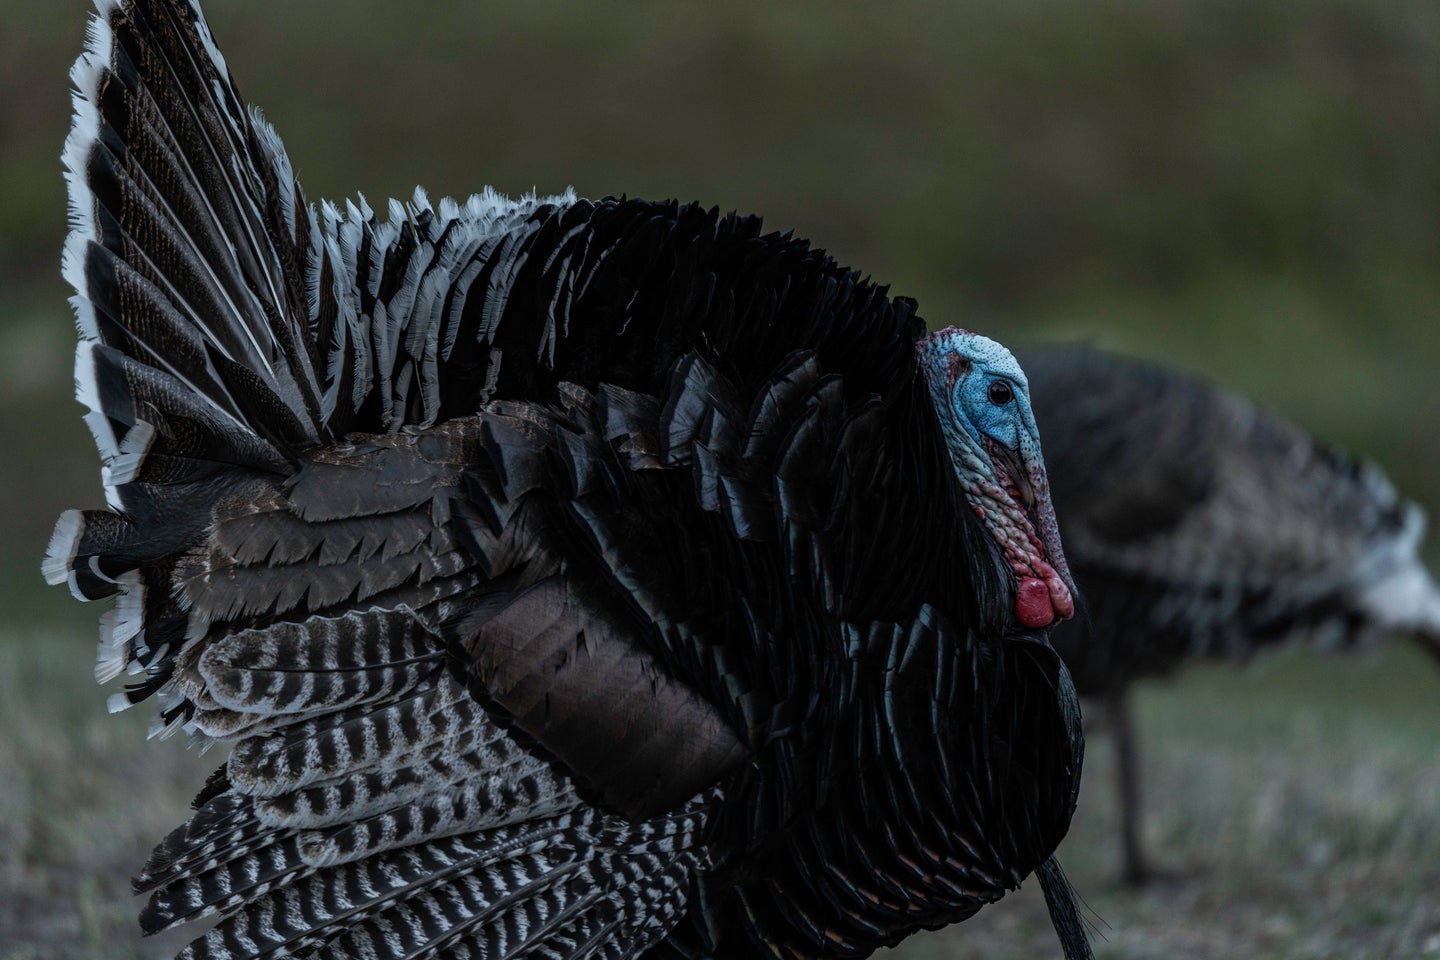 The Gould's turkey inhabits mountainous terrain in southwestern New Mexico